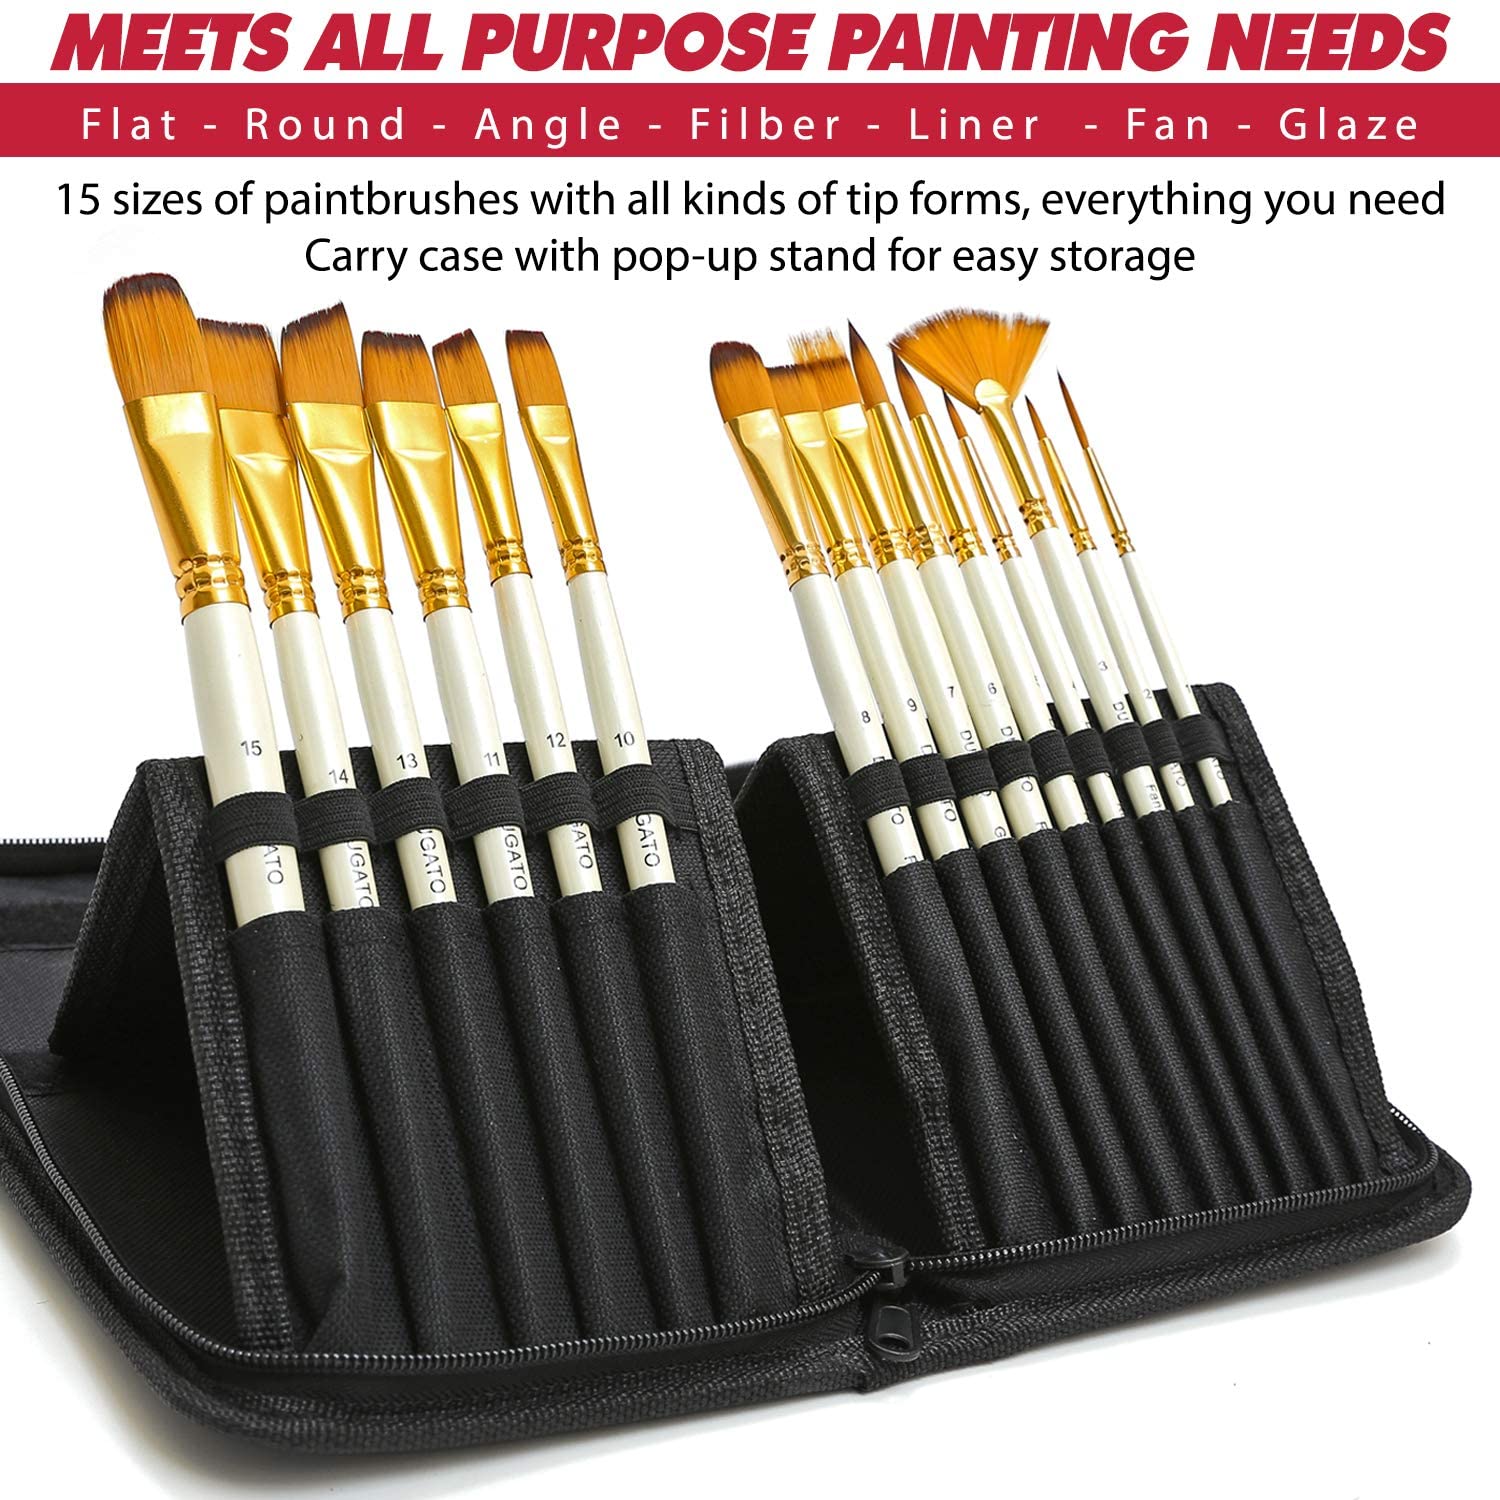 DUGATO Artist Paint Brush Set deals